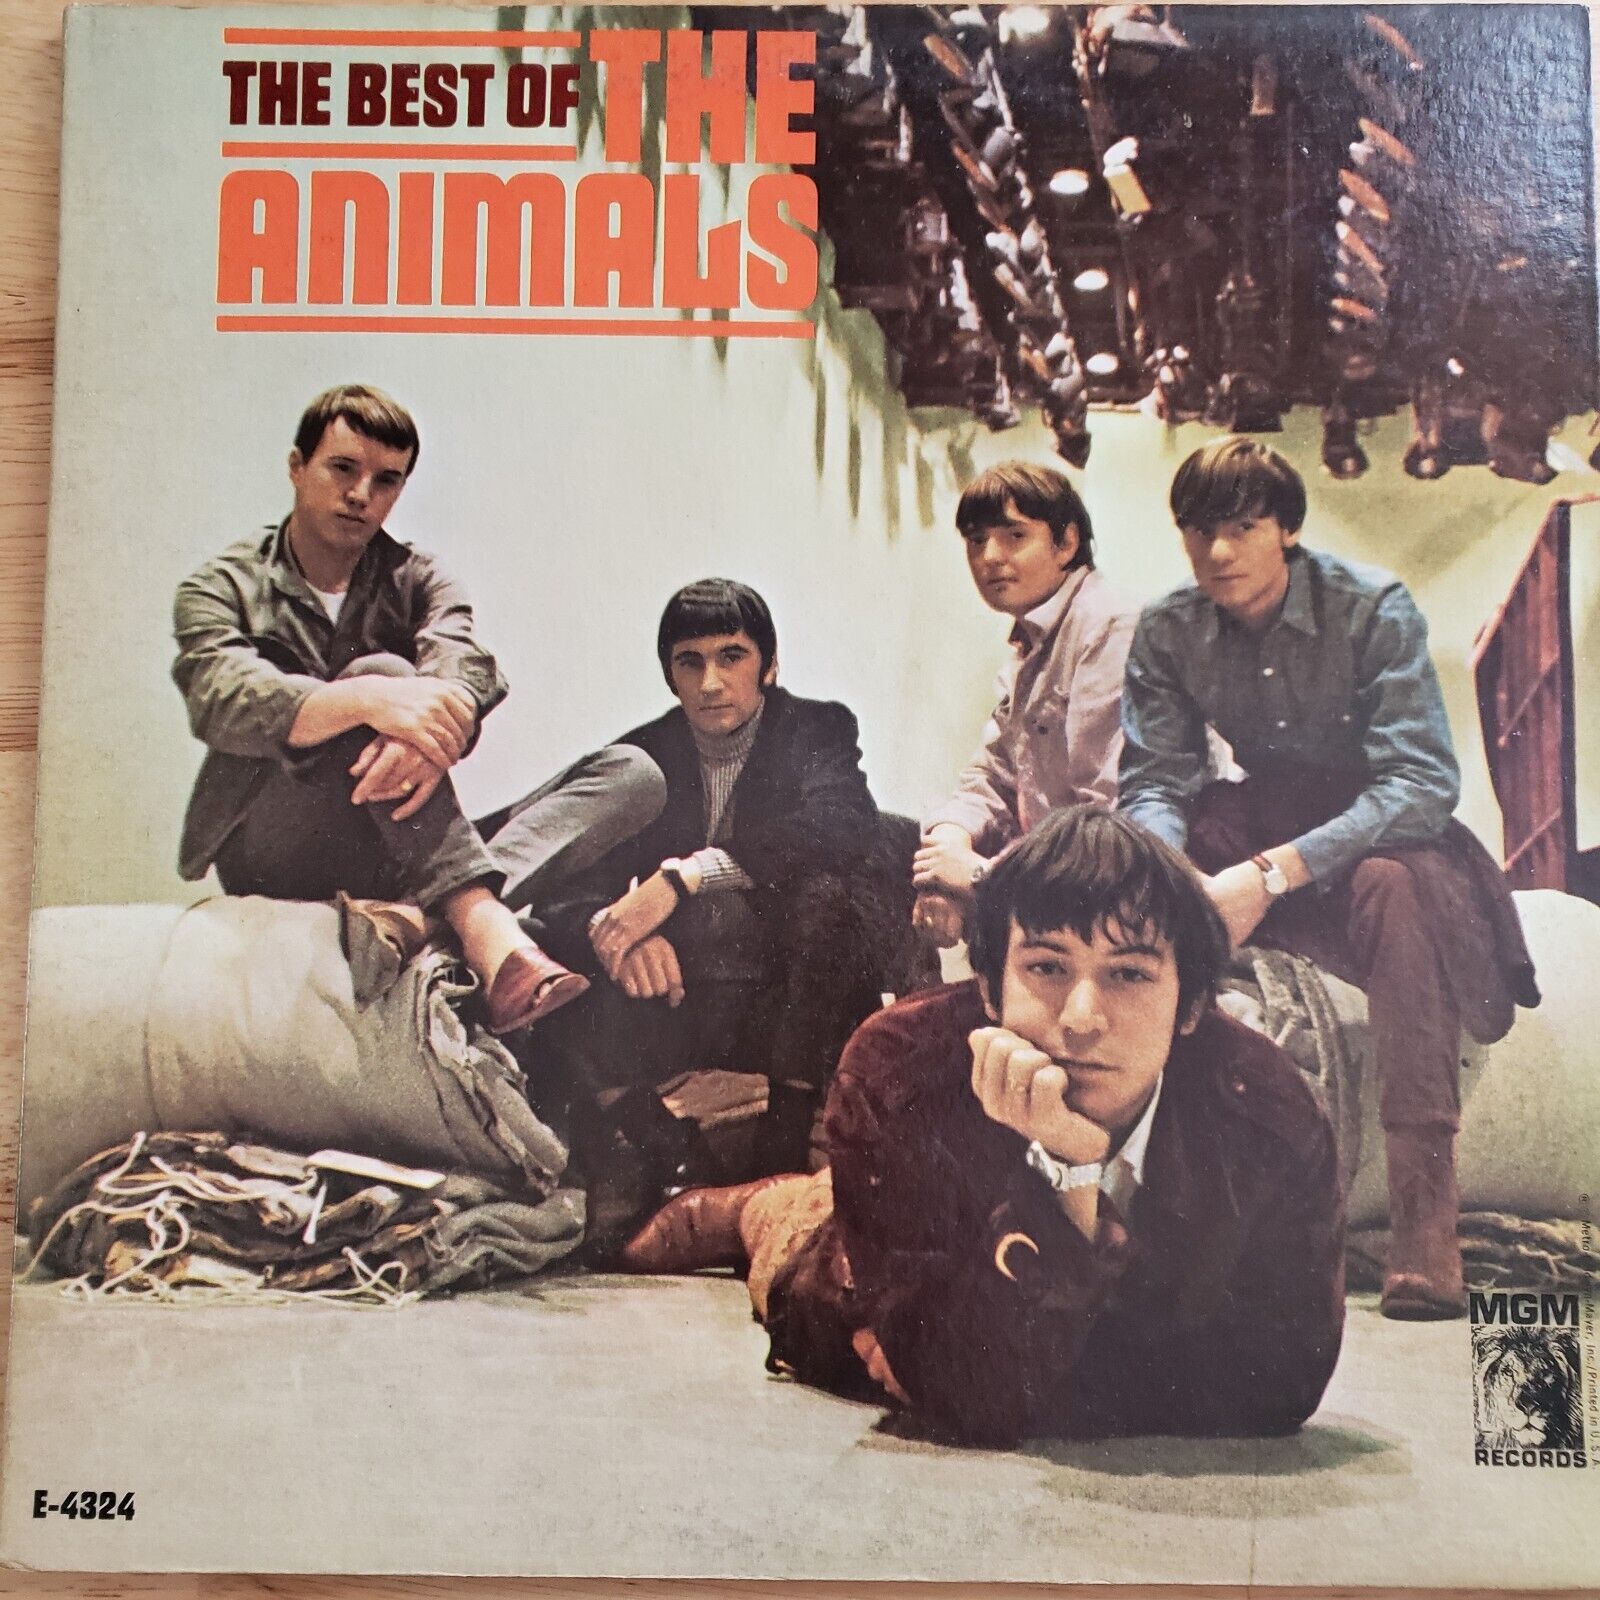 The Best of the Animals - Vinyl LP 1965 MGM Records E-4324 Mono  Gatefold